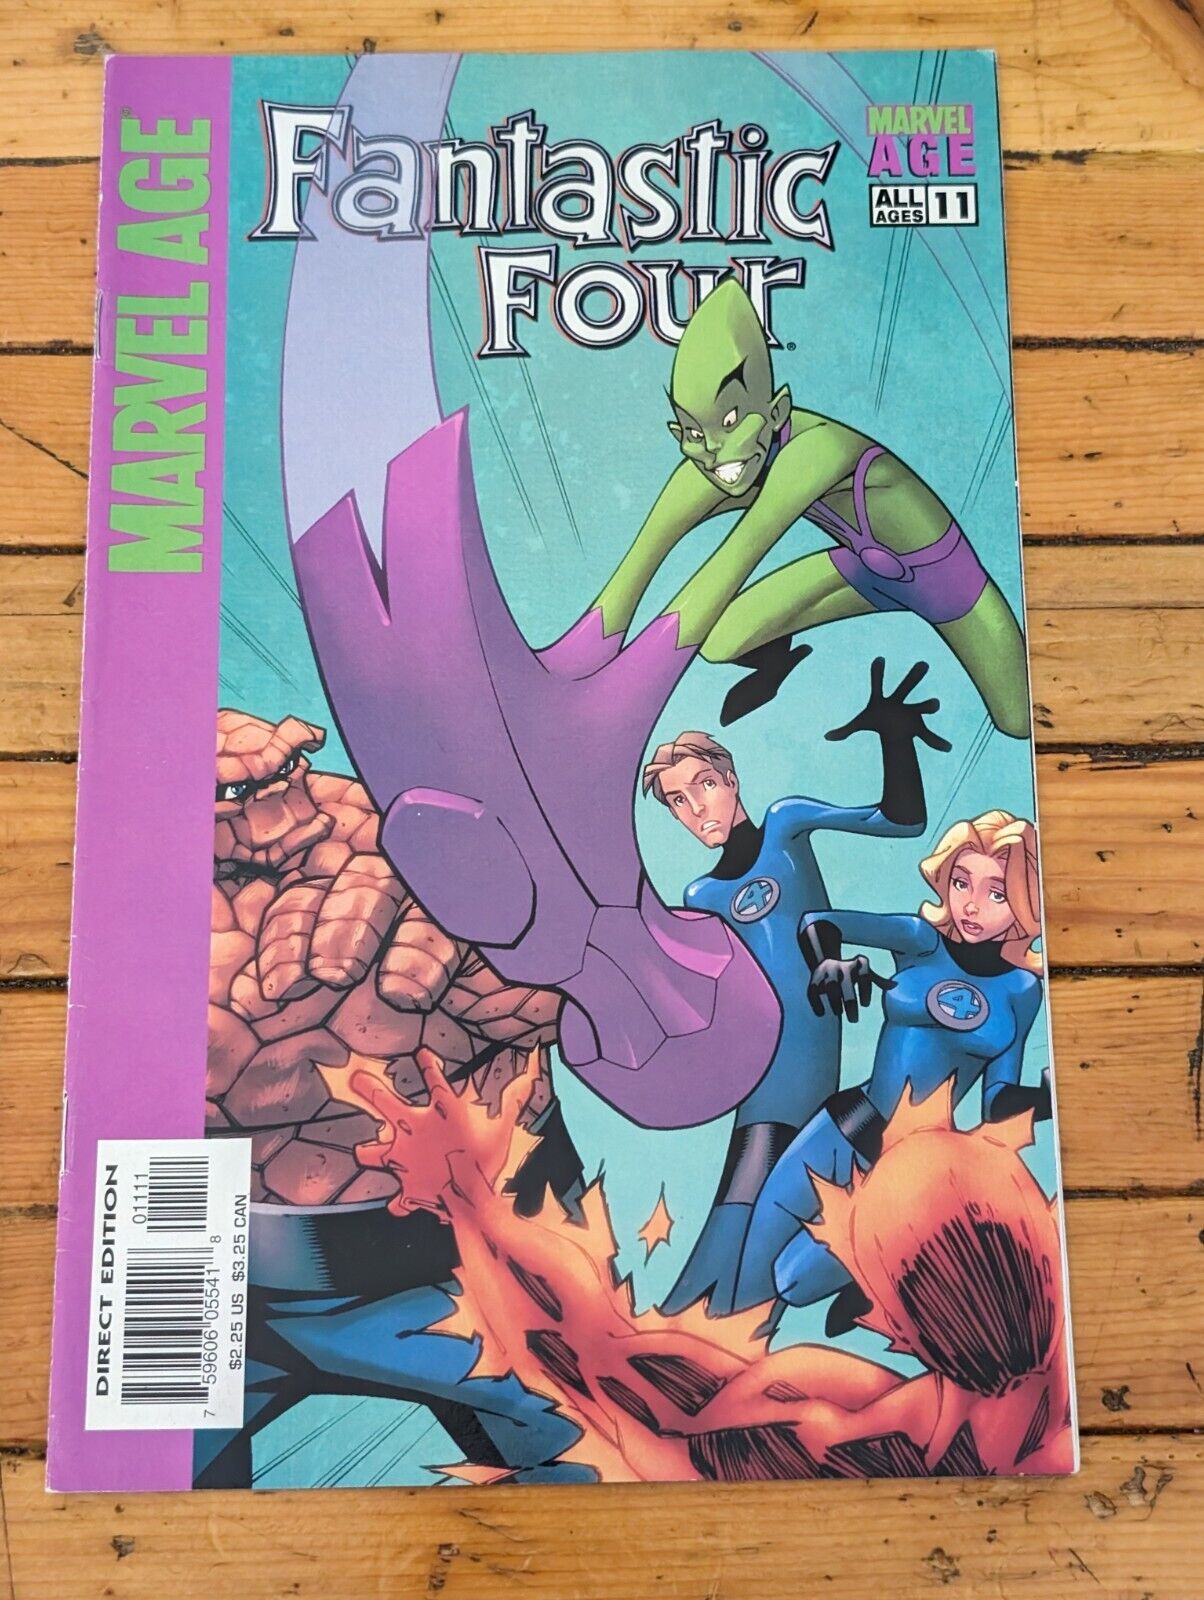 Marvel Age Fantastic Four #11 (Marvel Comics, March 2005)